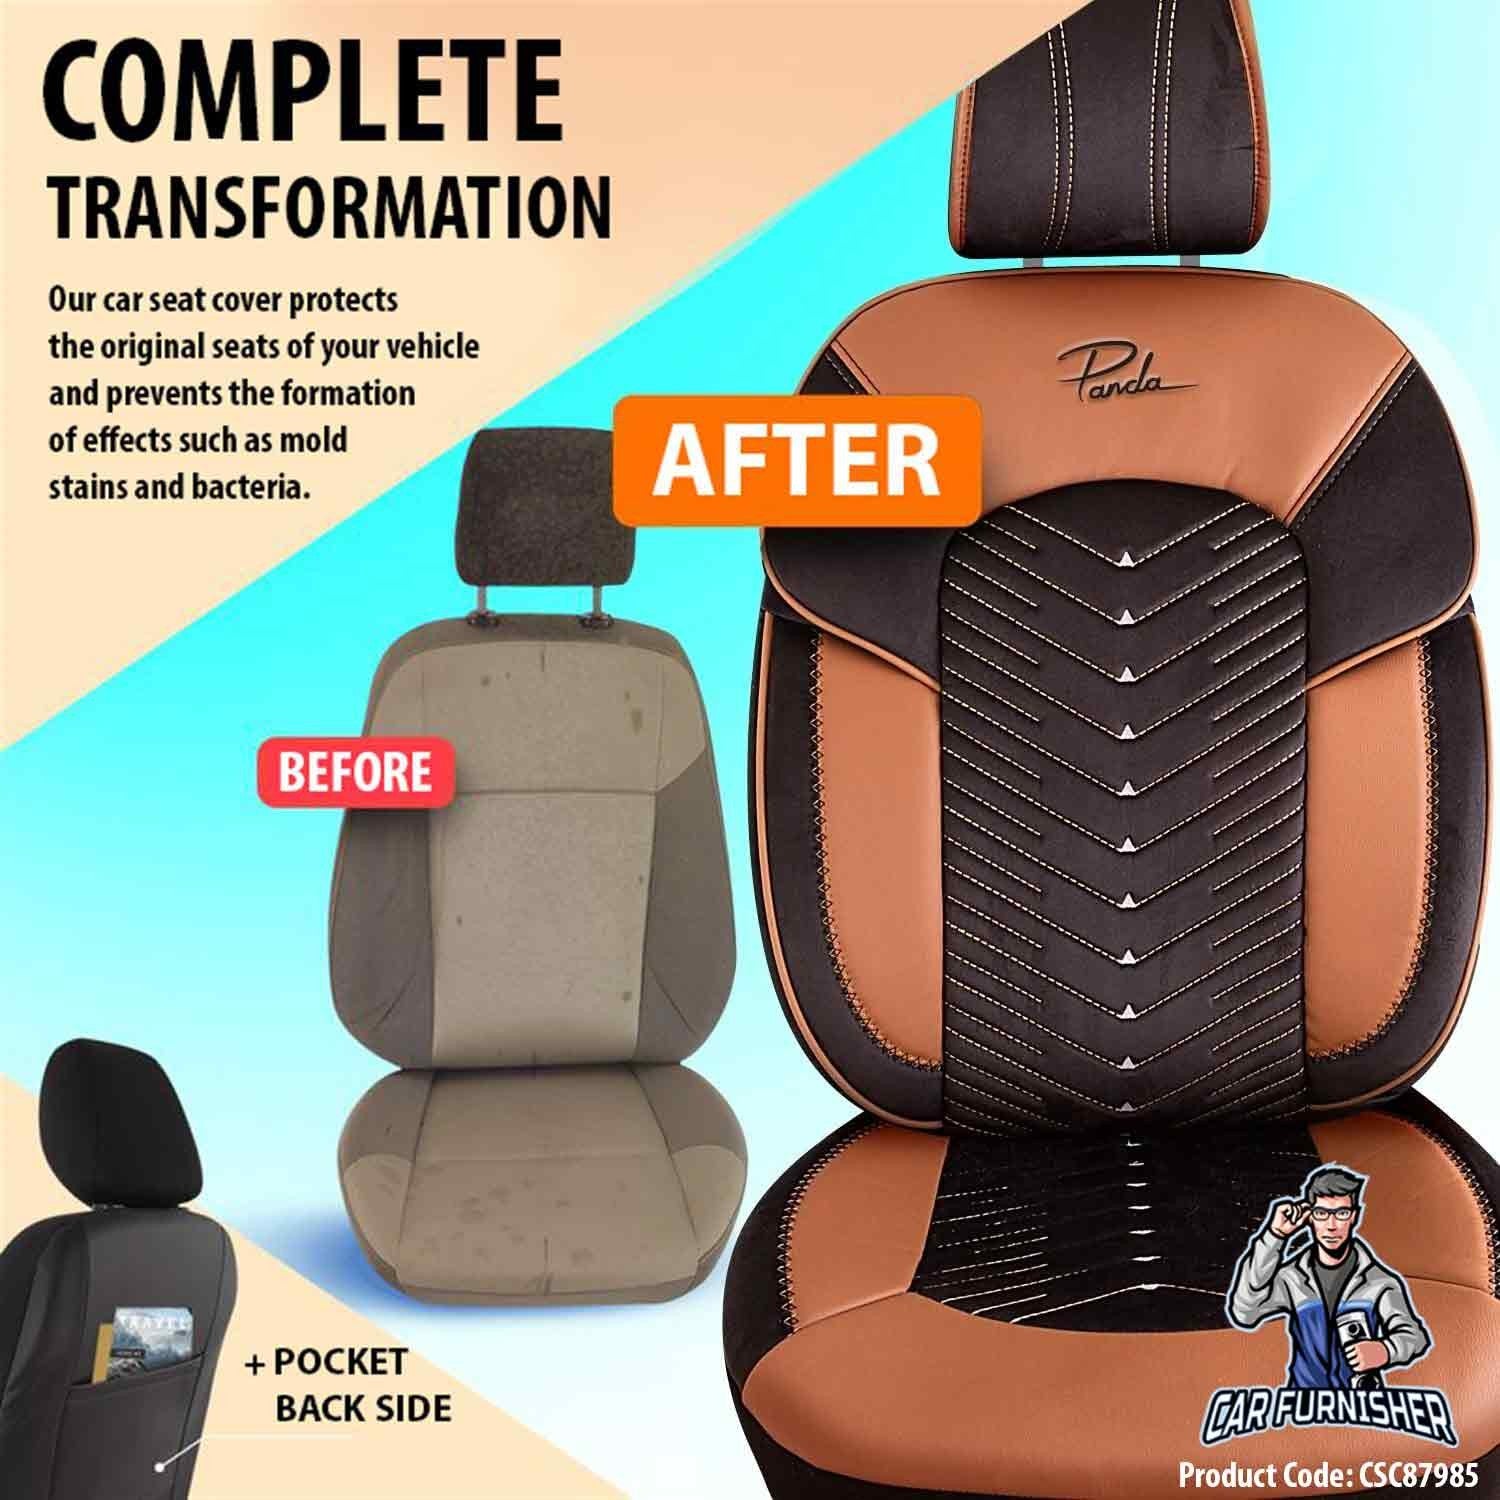 Luxury Car Seat Cover Set (7 Colors) | Dubai Series Tan-Snuff Leather & Fabric